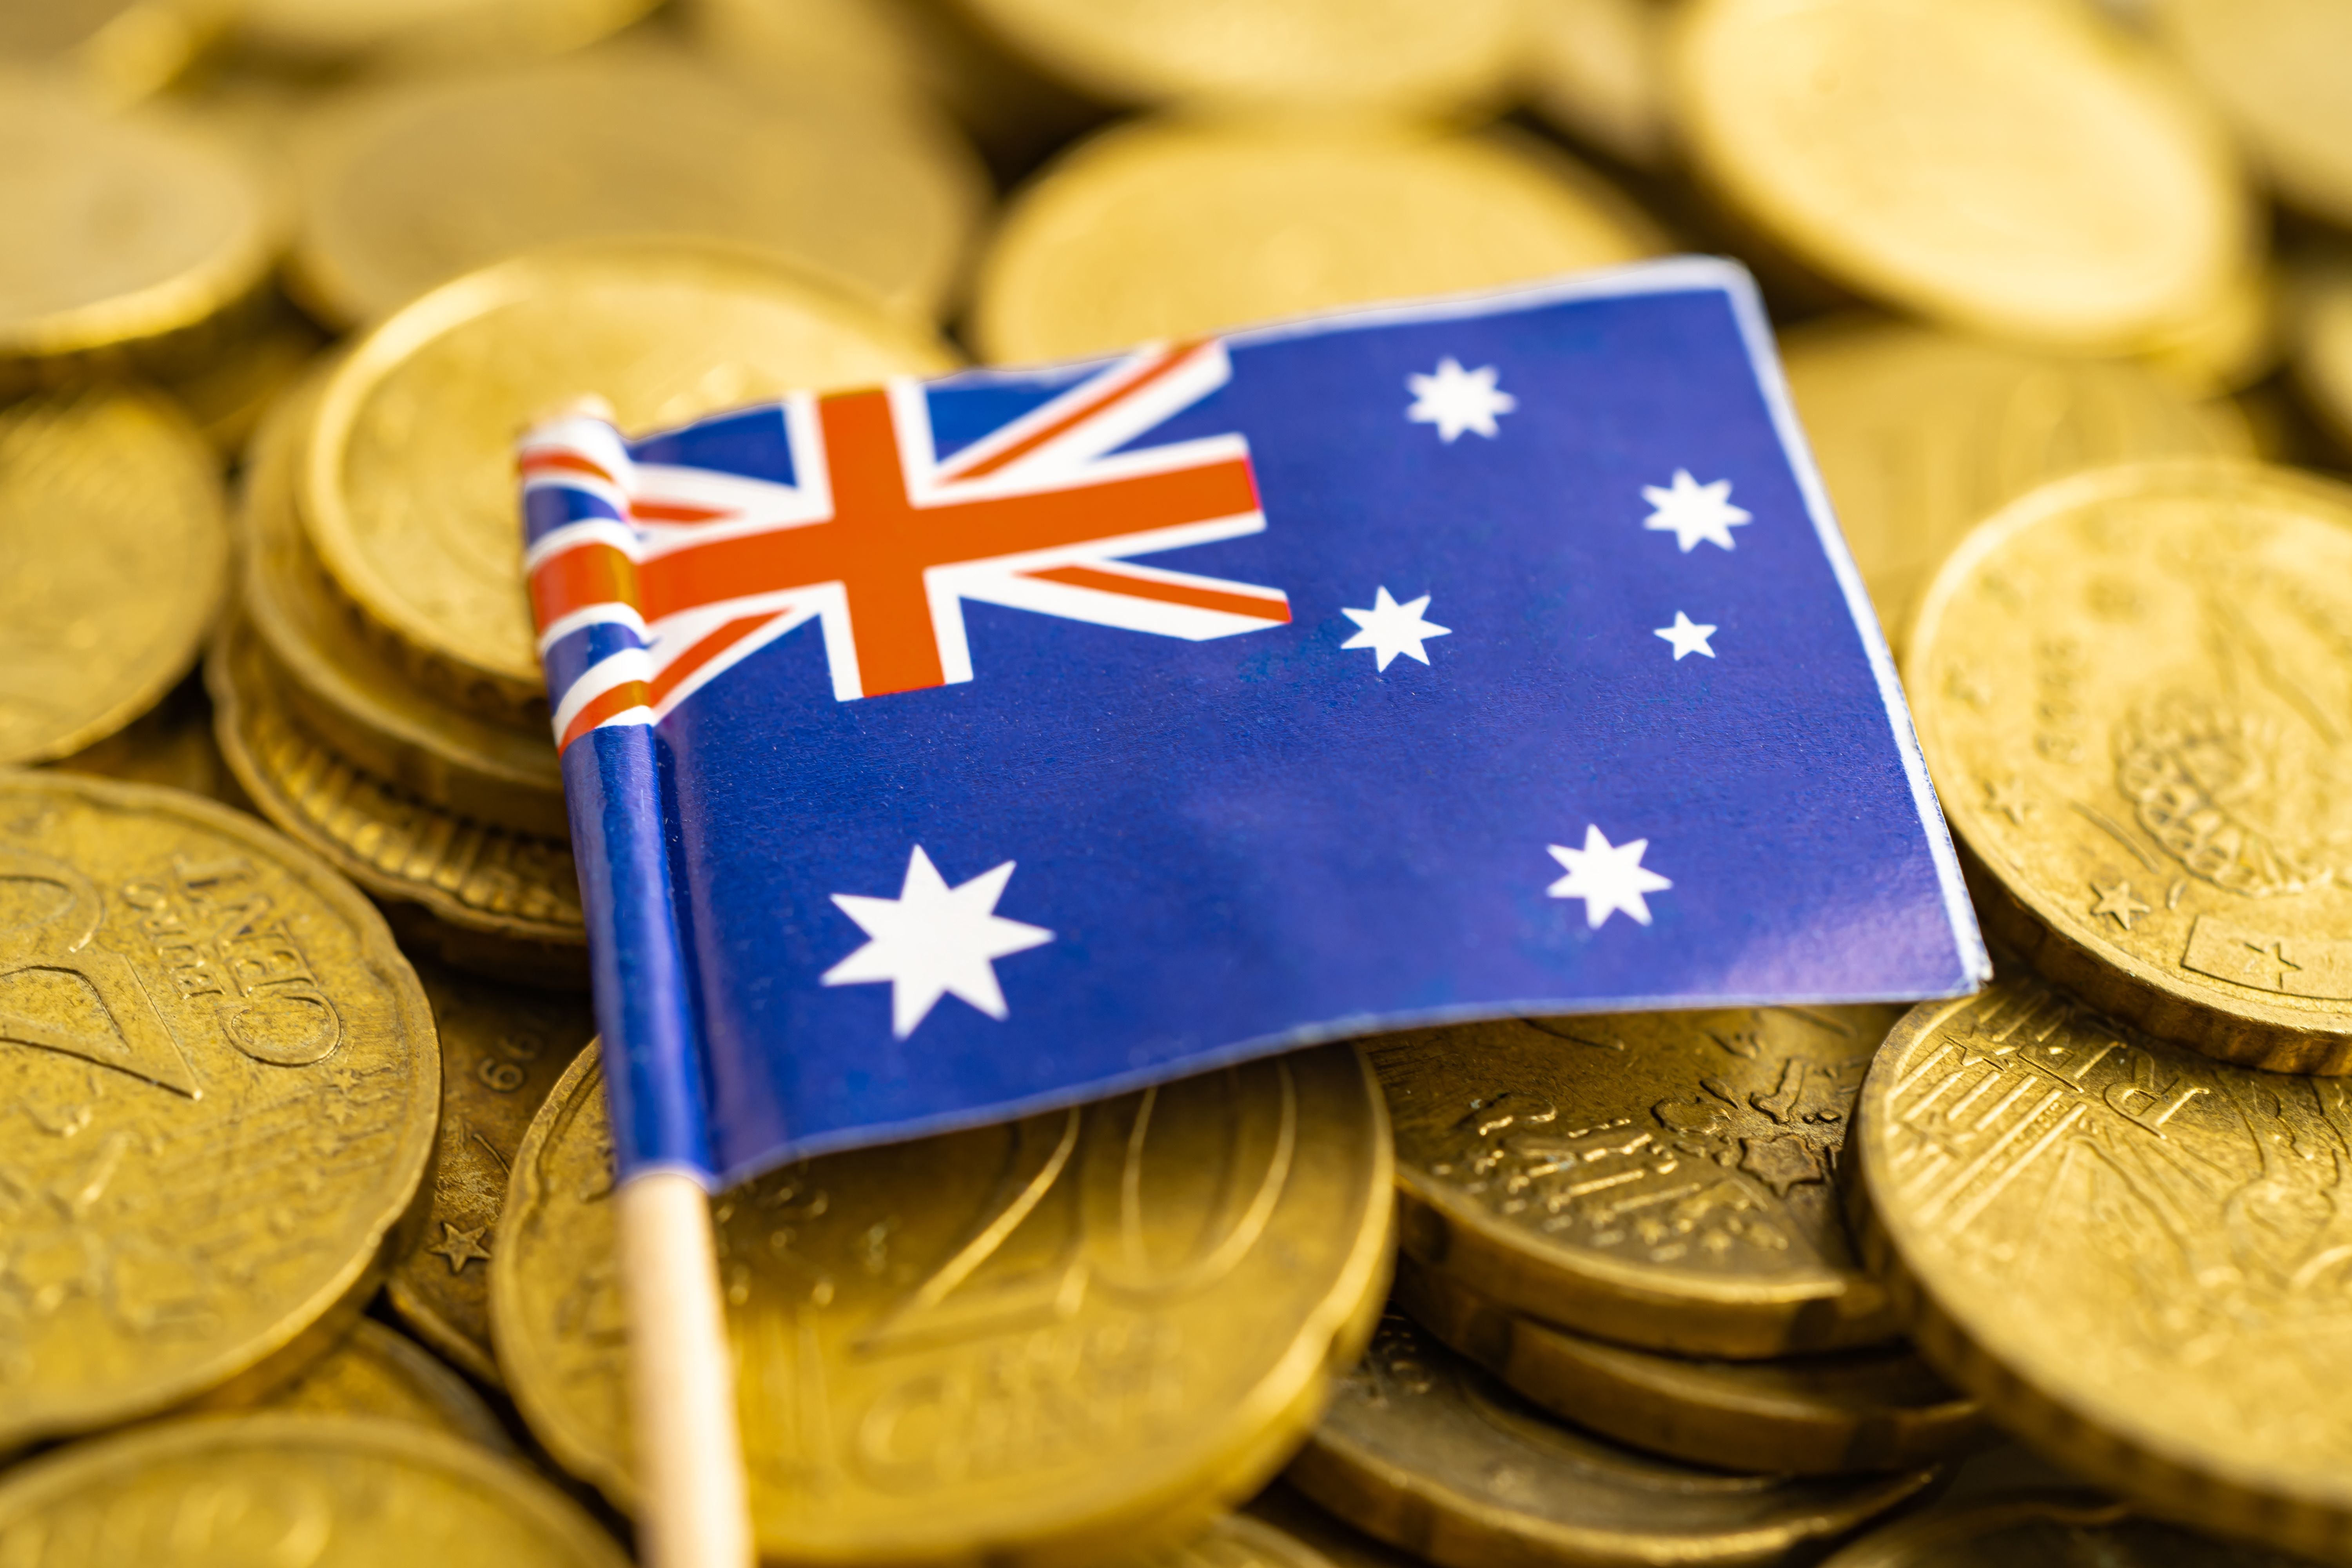 australia-flag-on-coins-money-finance-and-account-2024-01-03-01-51-57-utc.jpg